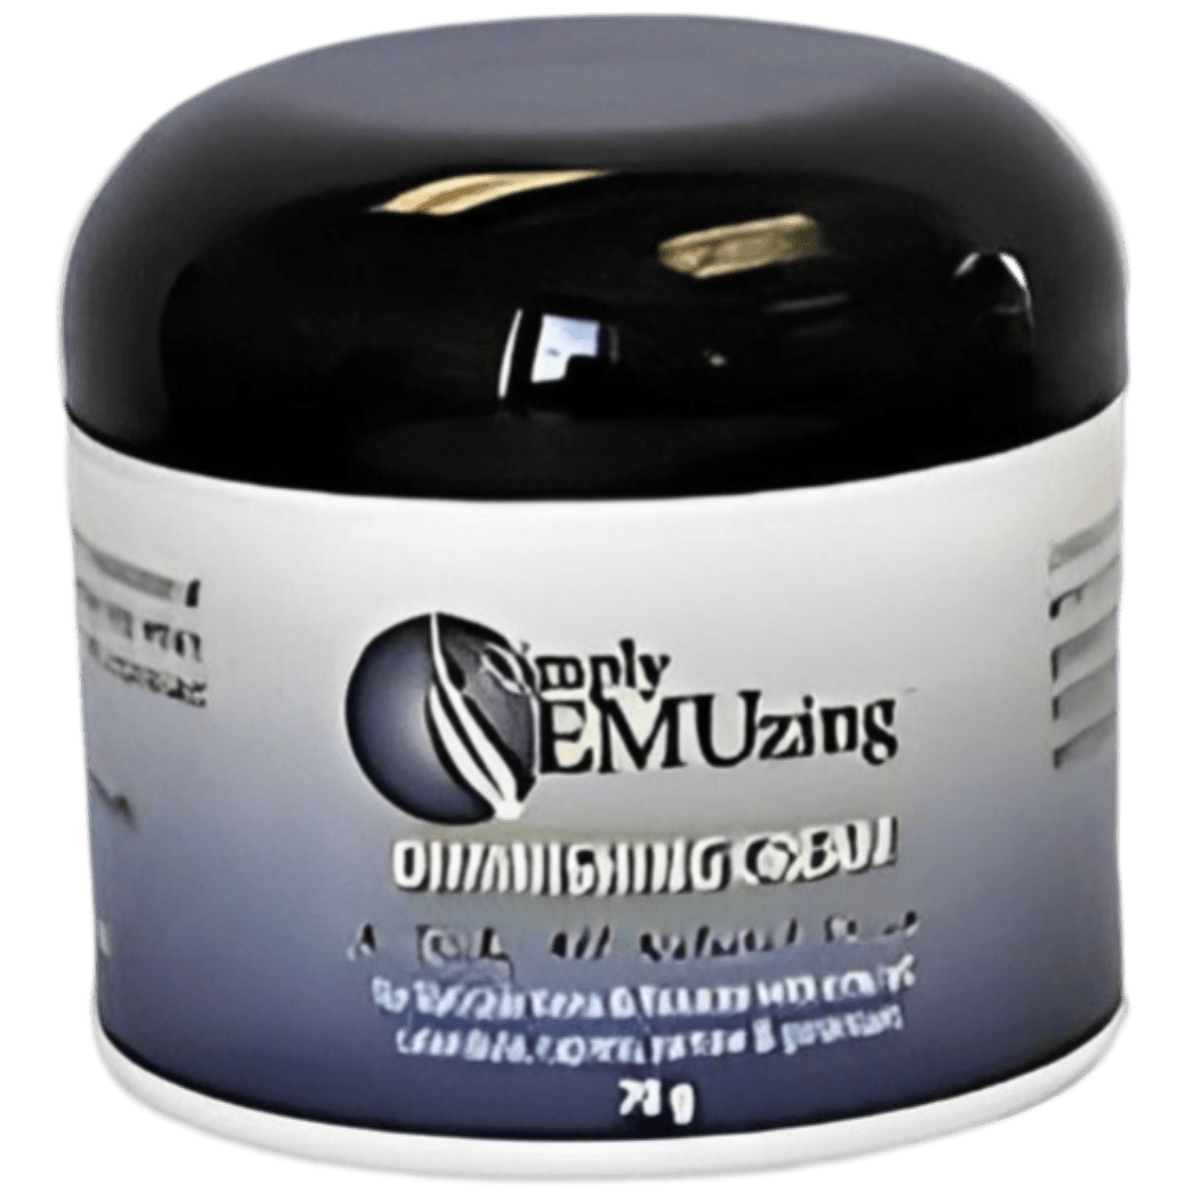 Simply EMUzing Diminishing Cream 70g Body Moisturizer at Village Vitamin Store